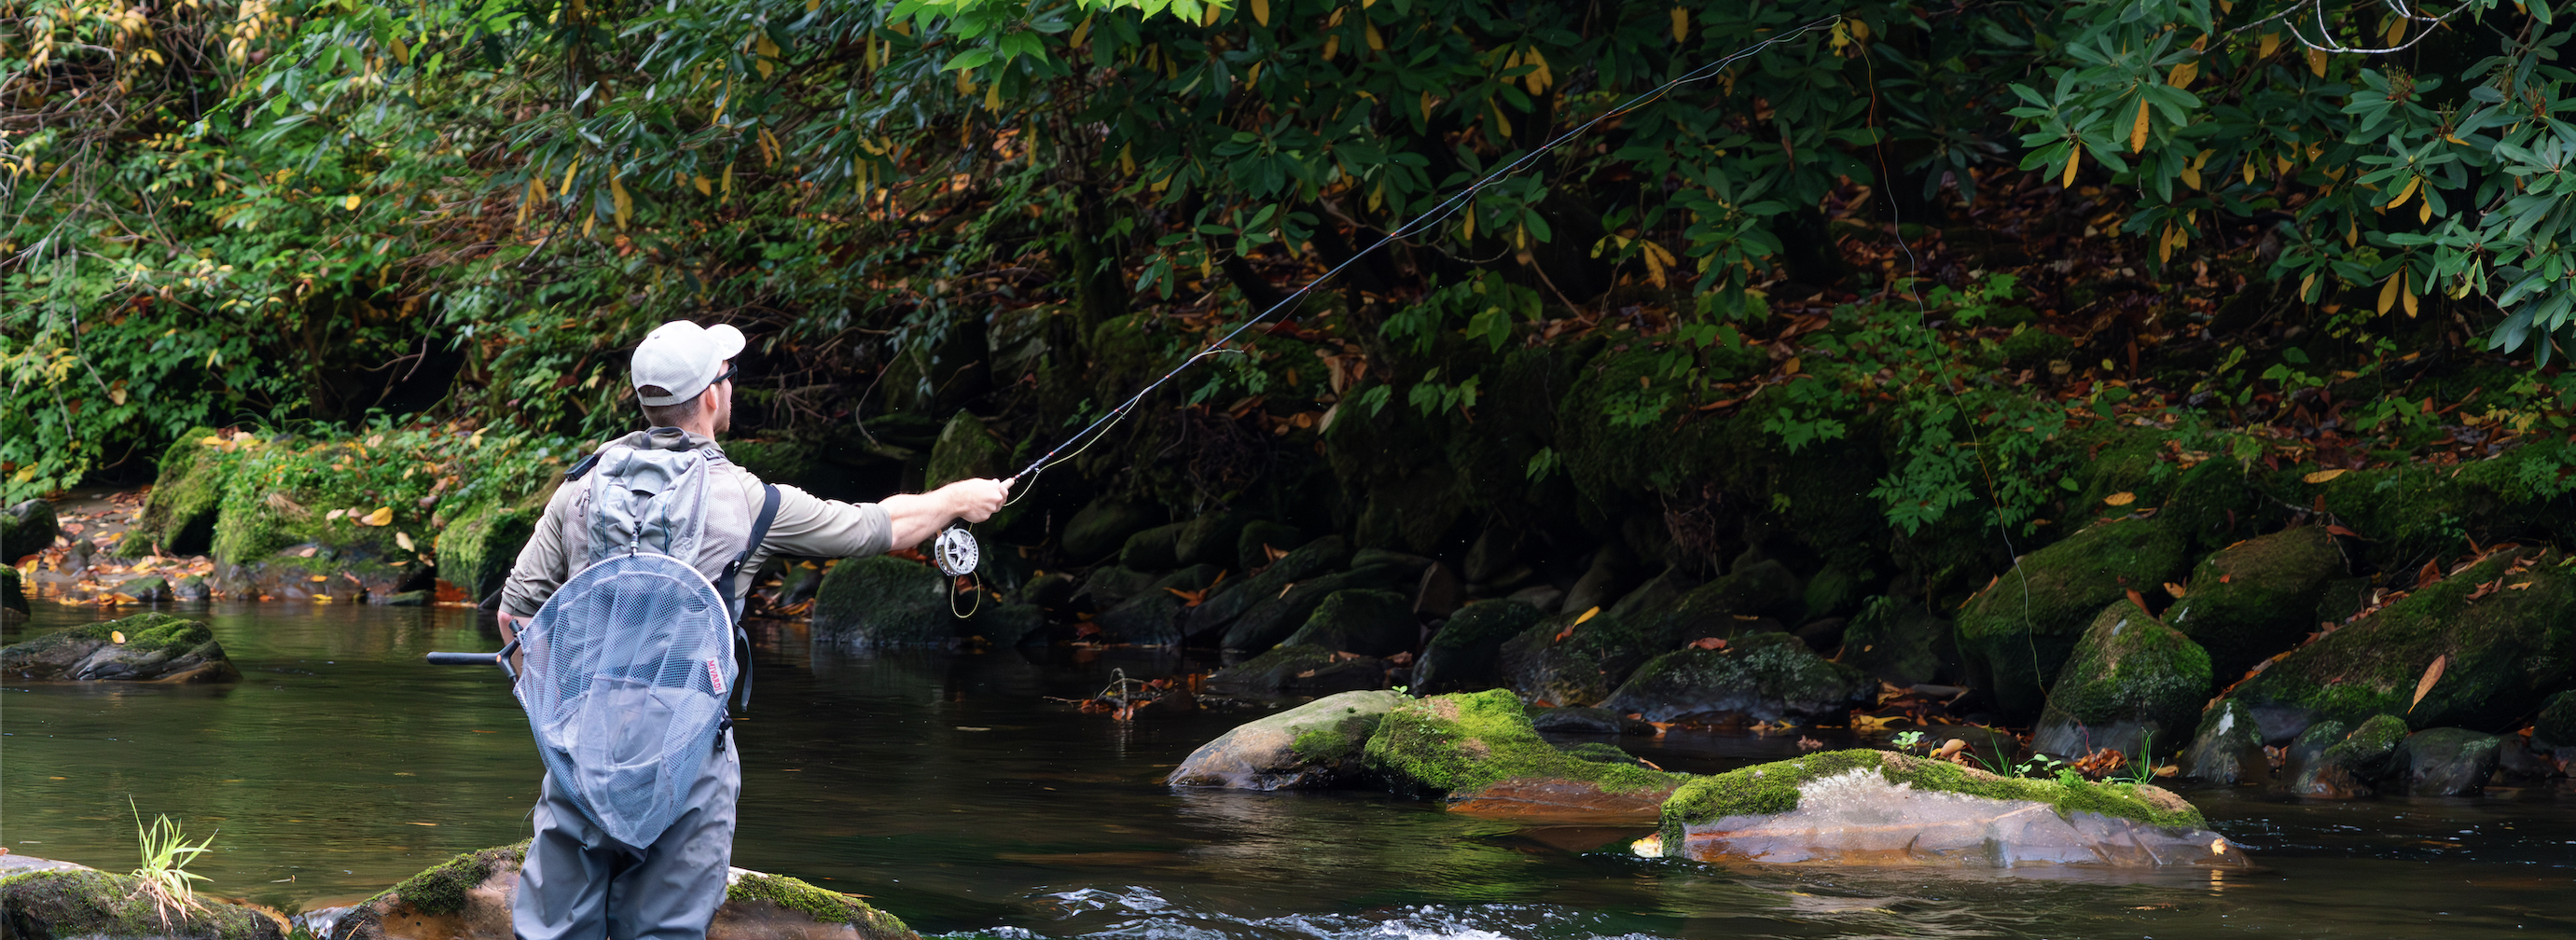 Angler Mike Komara fishing a competition